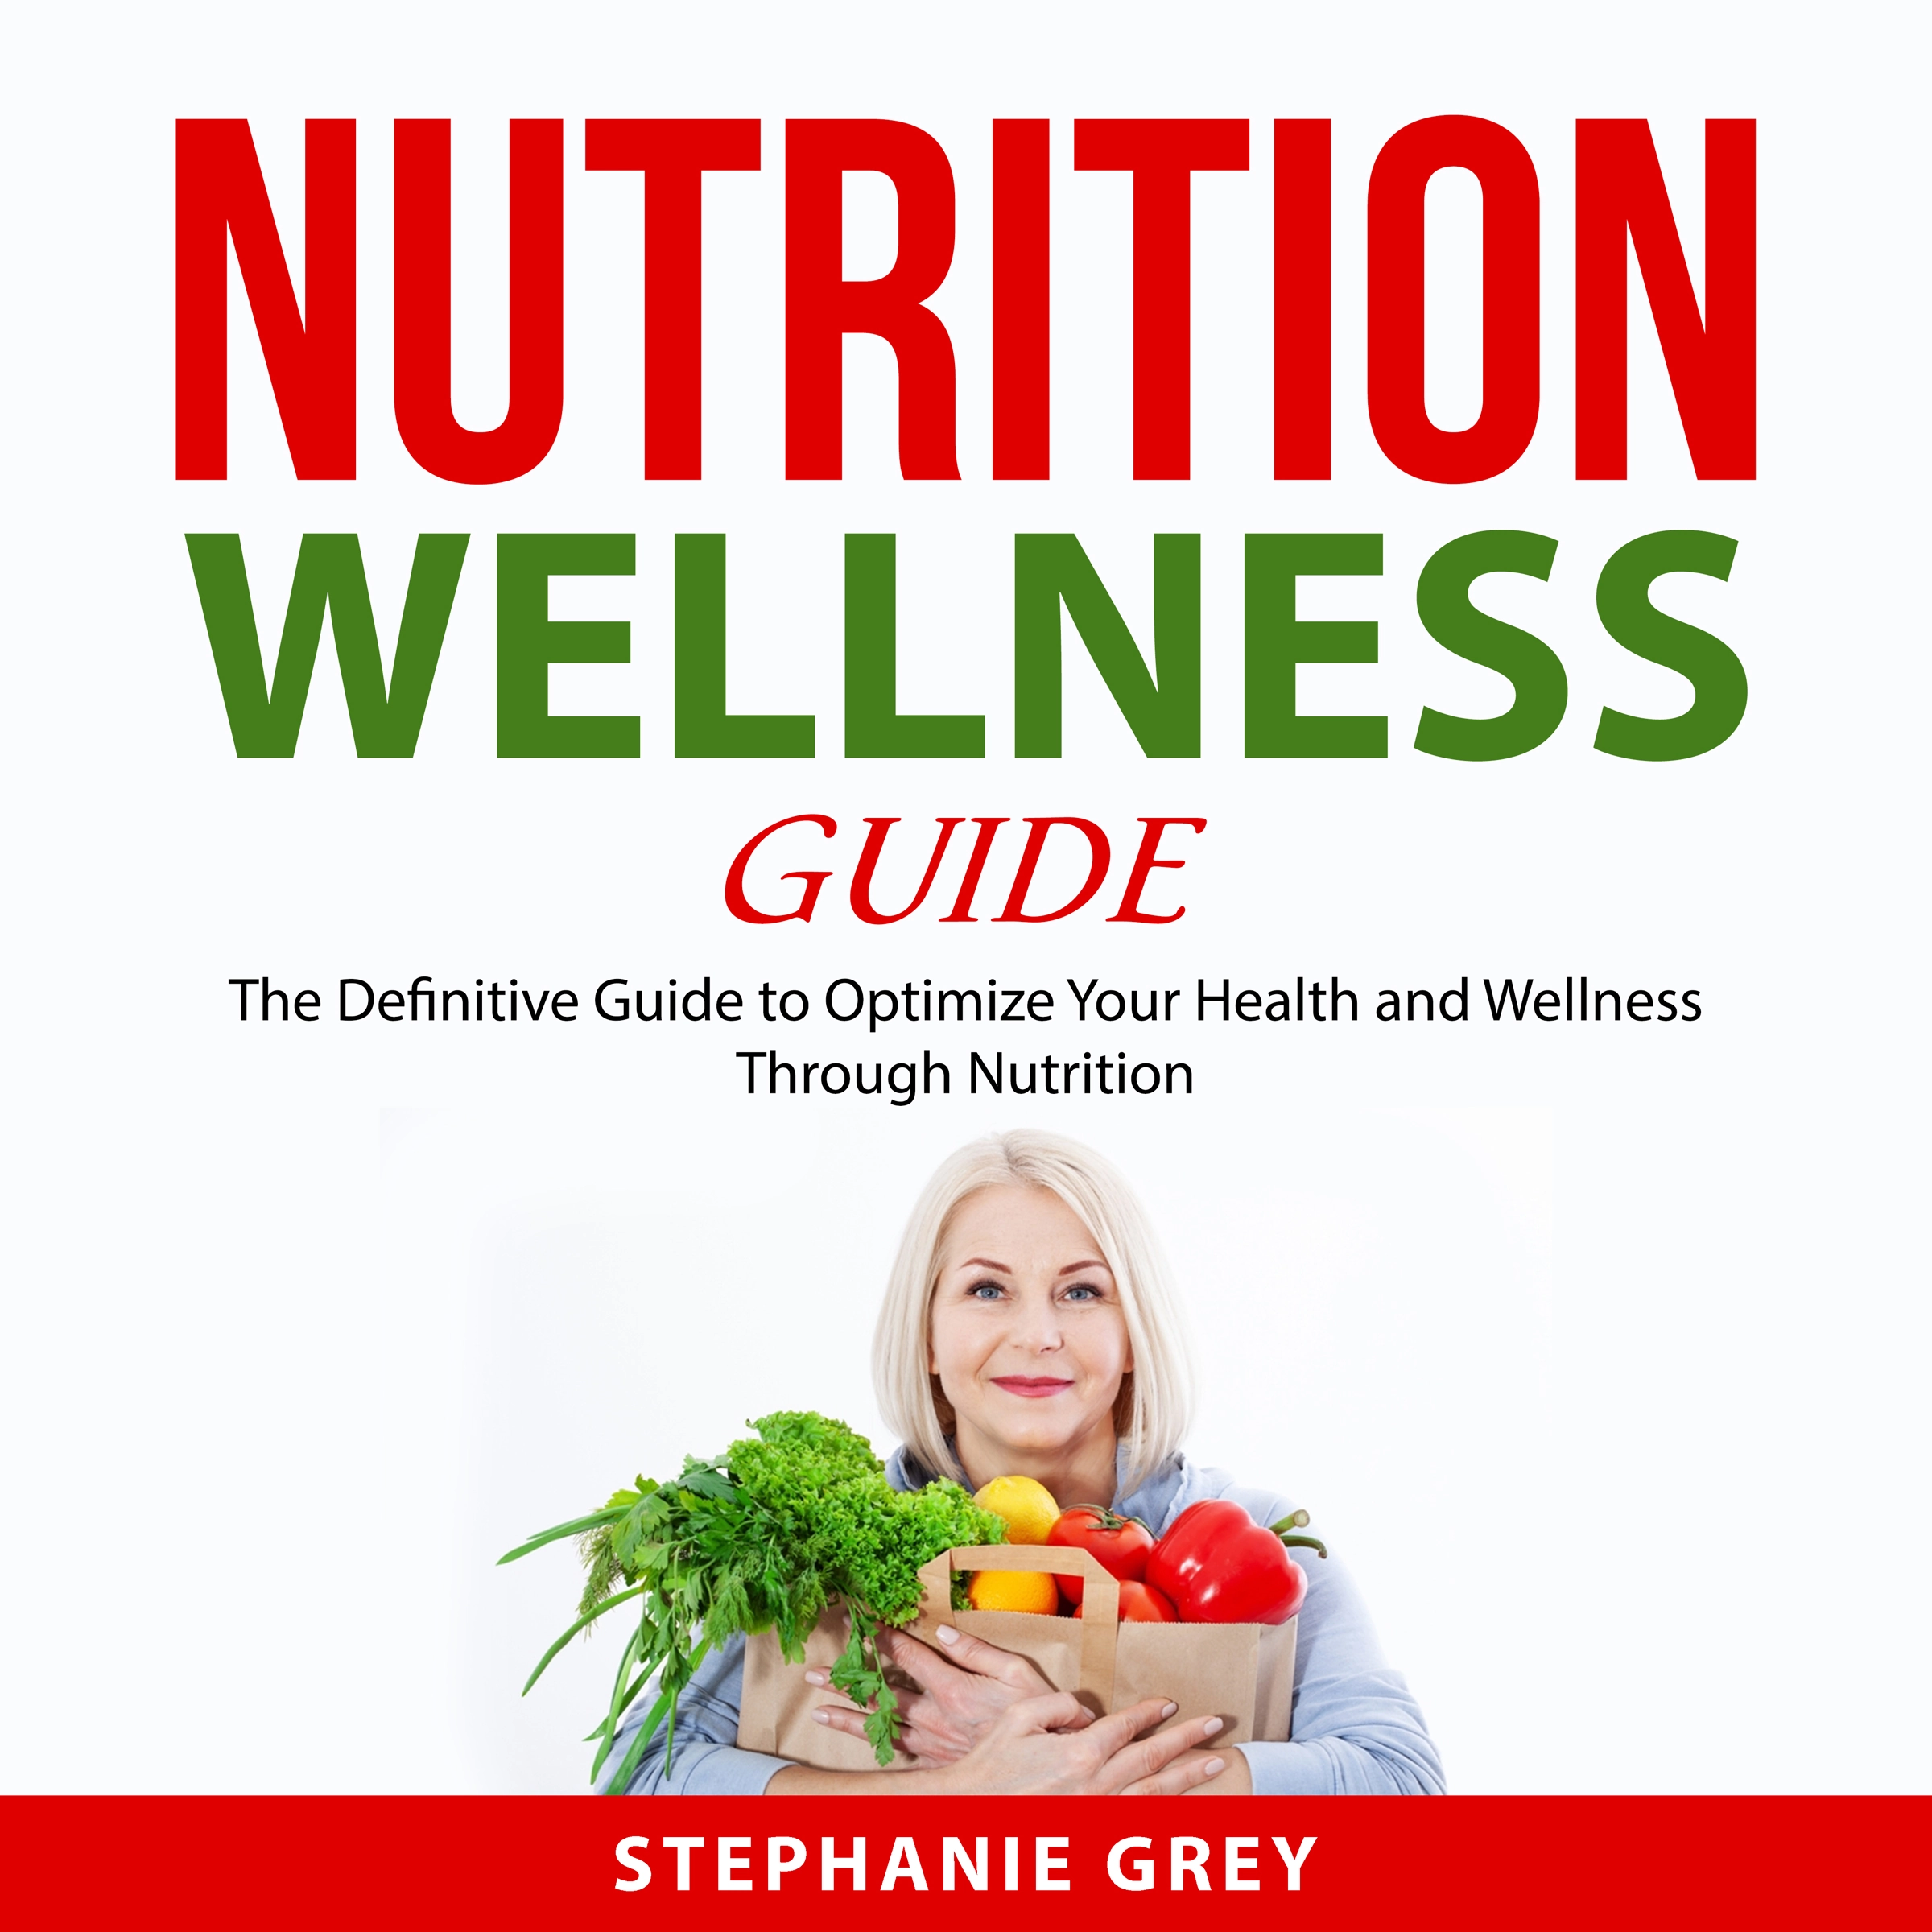 Nutrition Wellness Guide Audiobook by Stephanie Grey